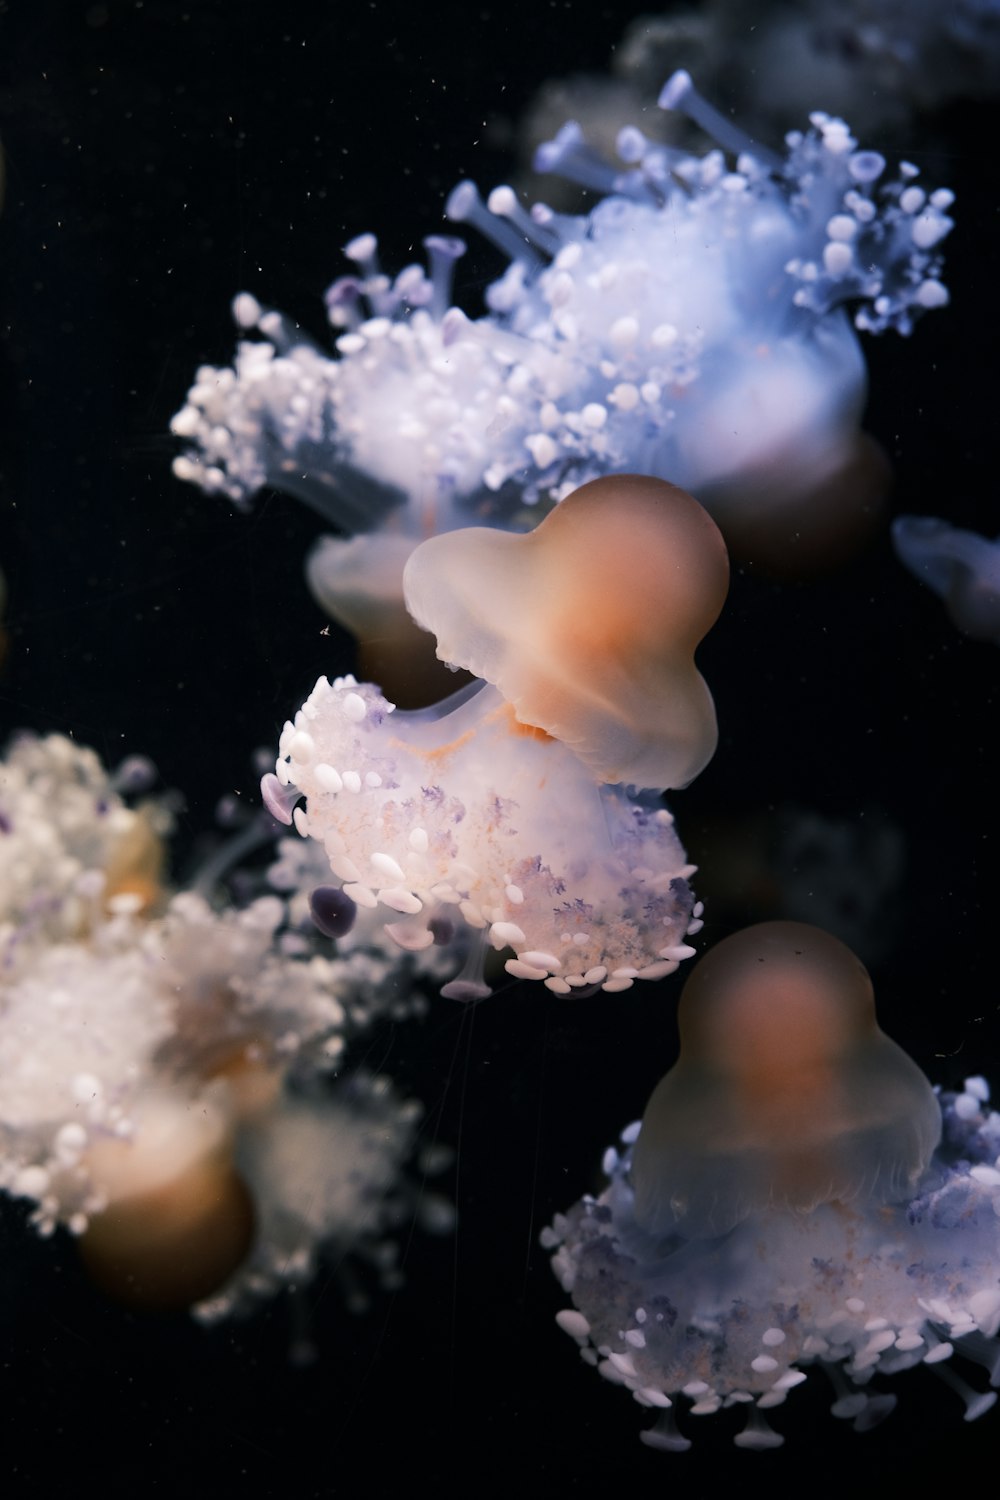 Un grupo de medusas flotando en el agua